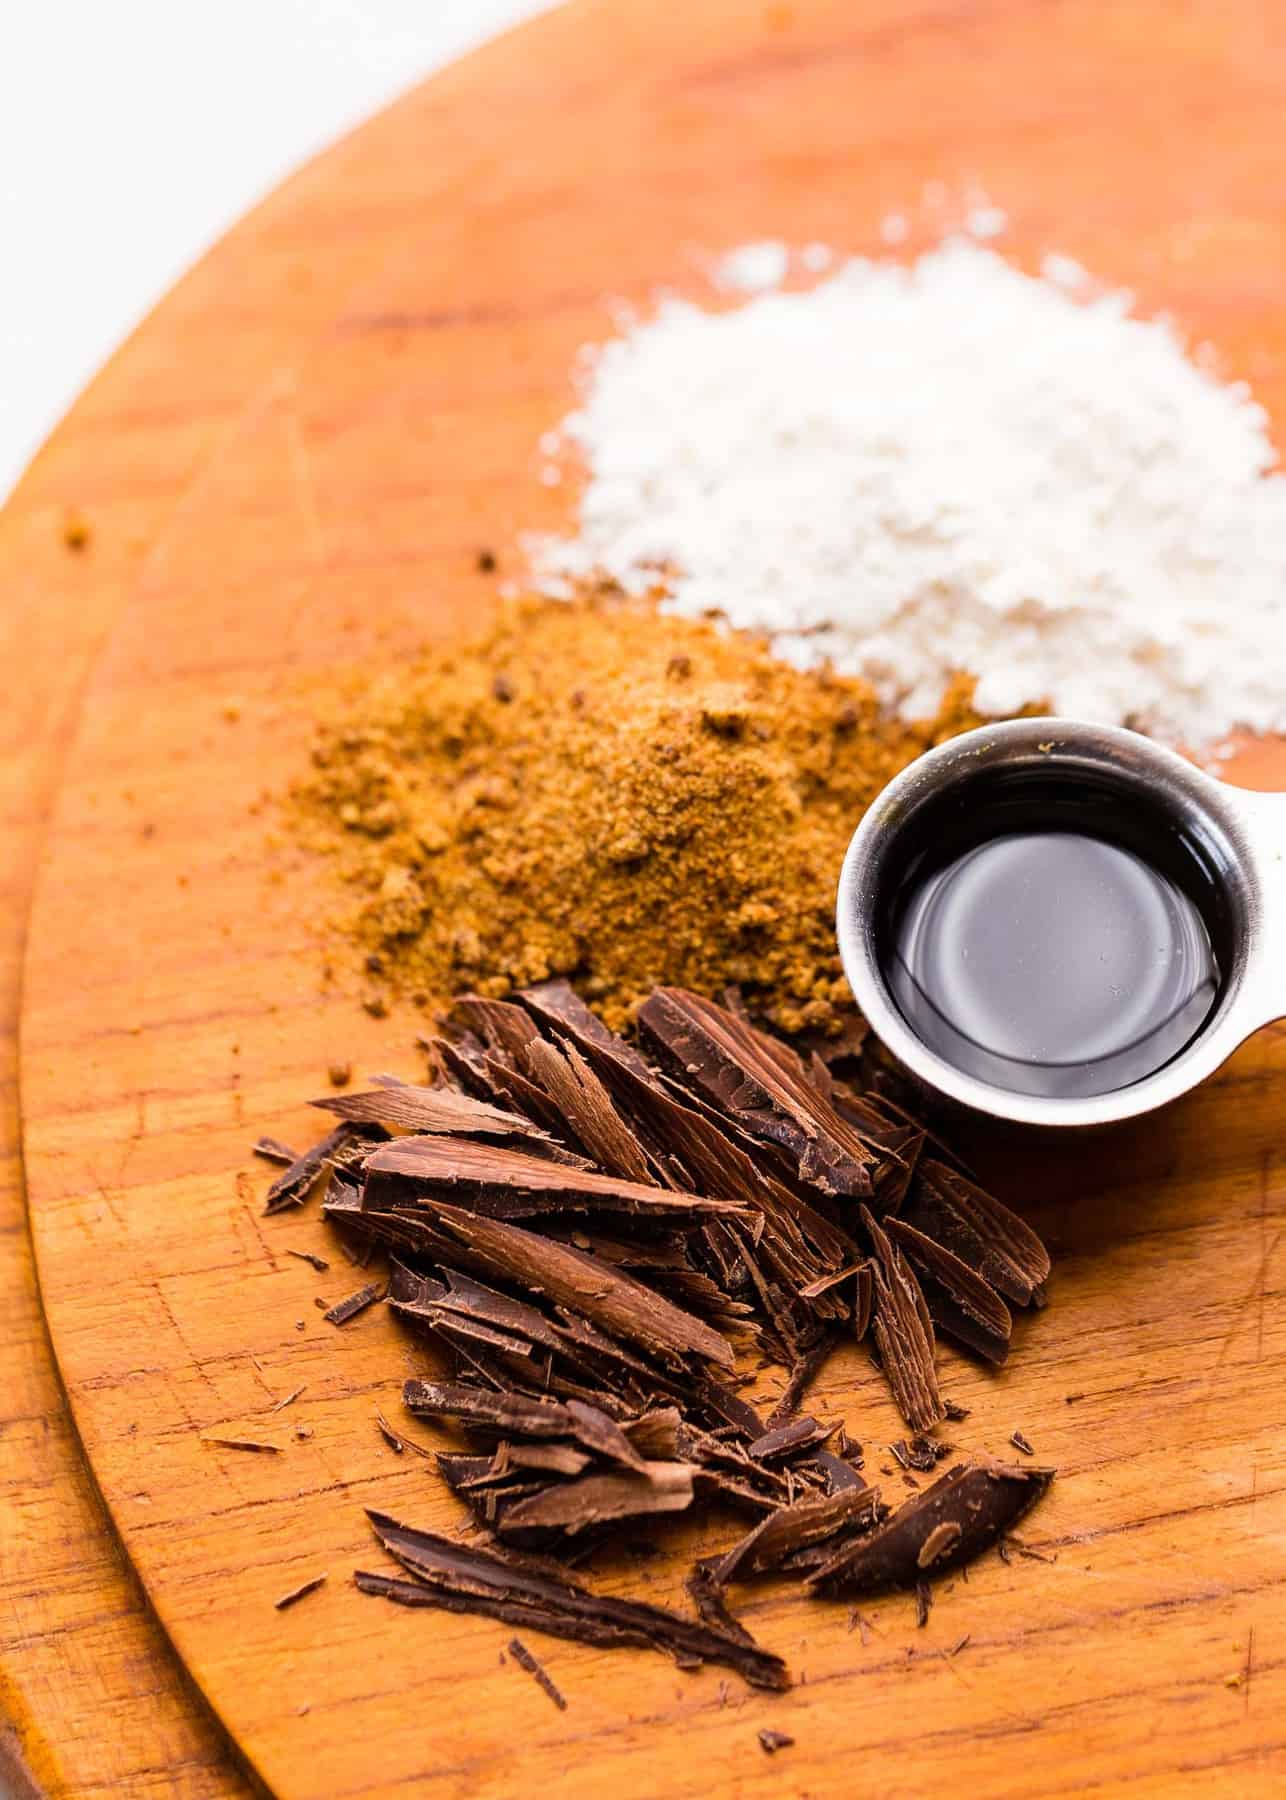 Ingredients to add depth to vegan chili: Dark chocolate, dark brown sugar, soy sauce, and flour.